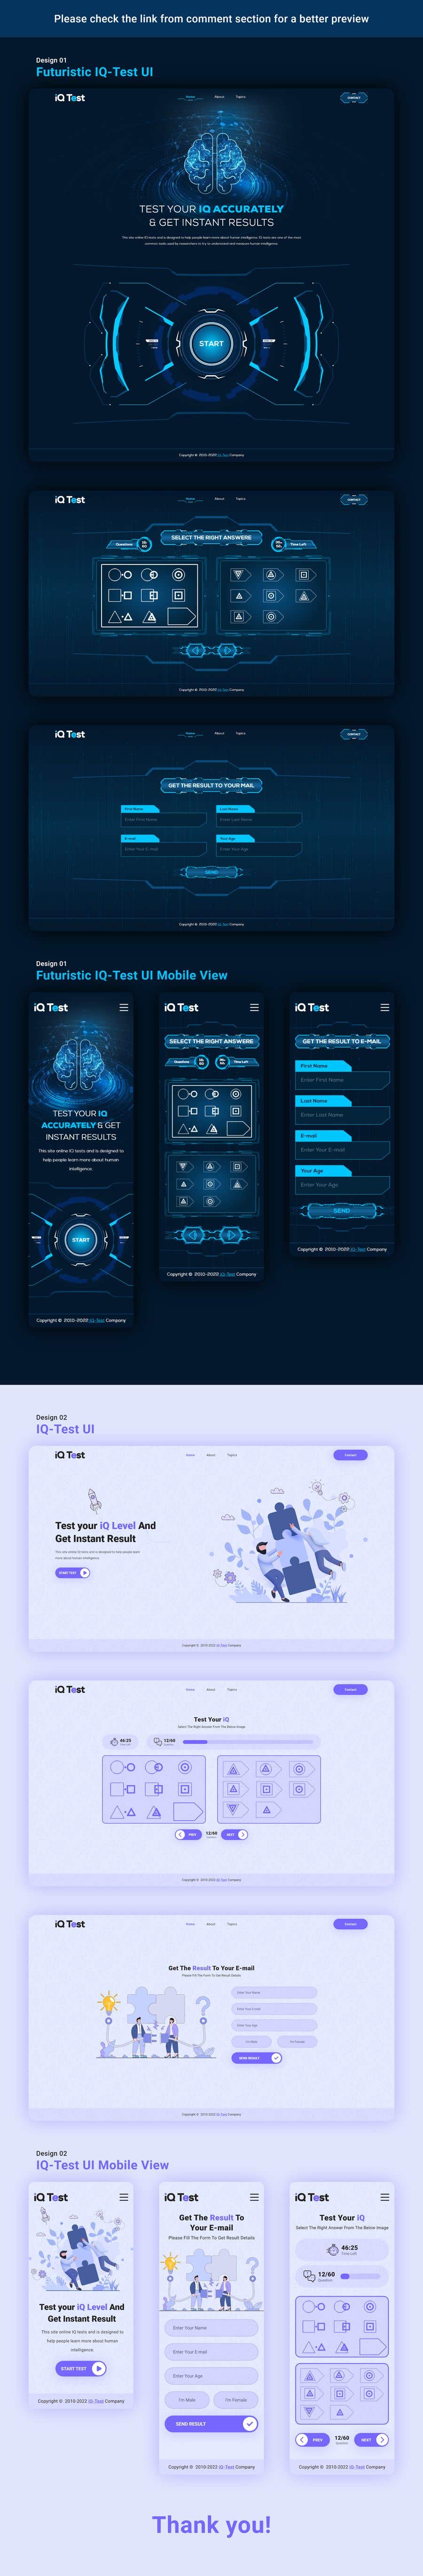 
                                                                                                                        Konkurrenceindlæg #                                            75
                                         for                                             Design nice user interface for an IQ test website
                                        